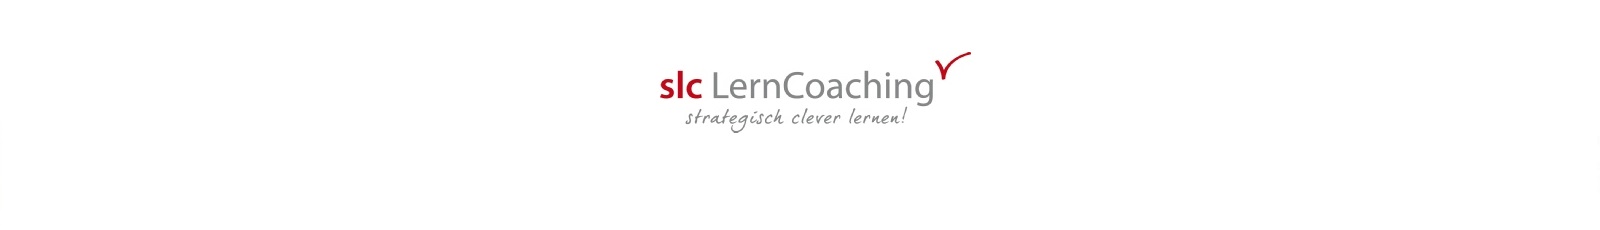 SLC Lerncoaching